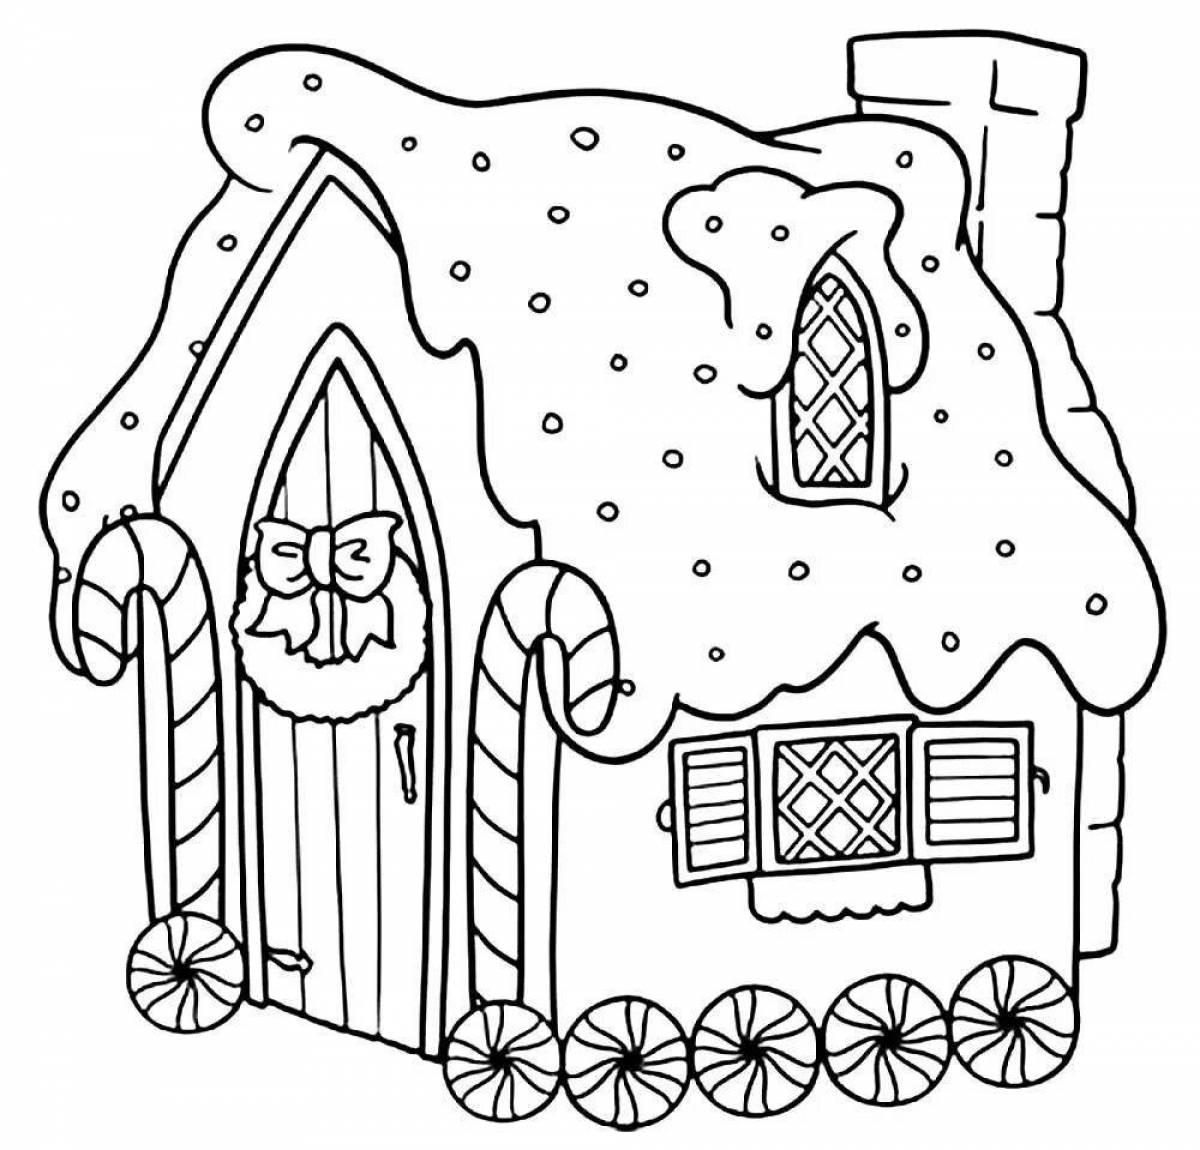 Fun coloring christmas gingerbread house